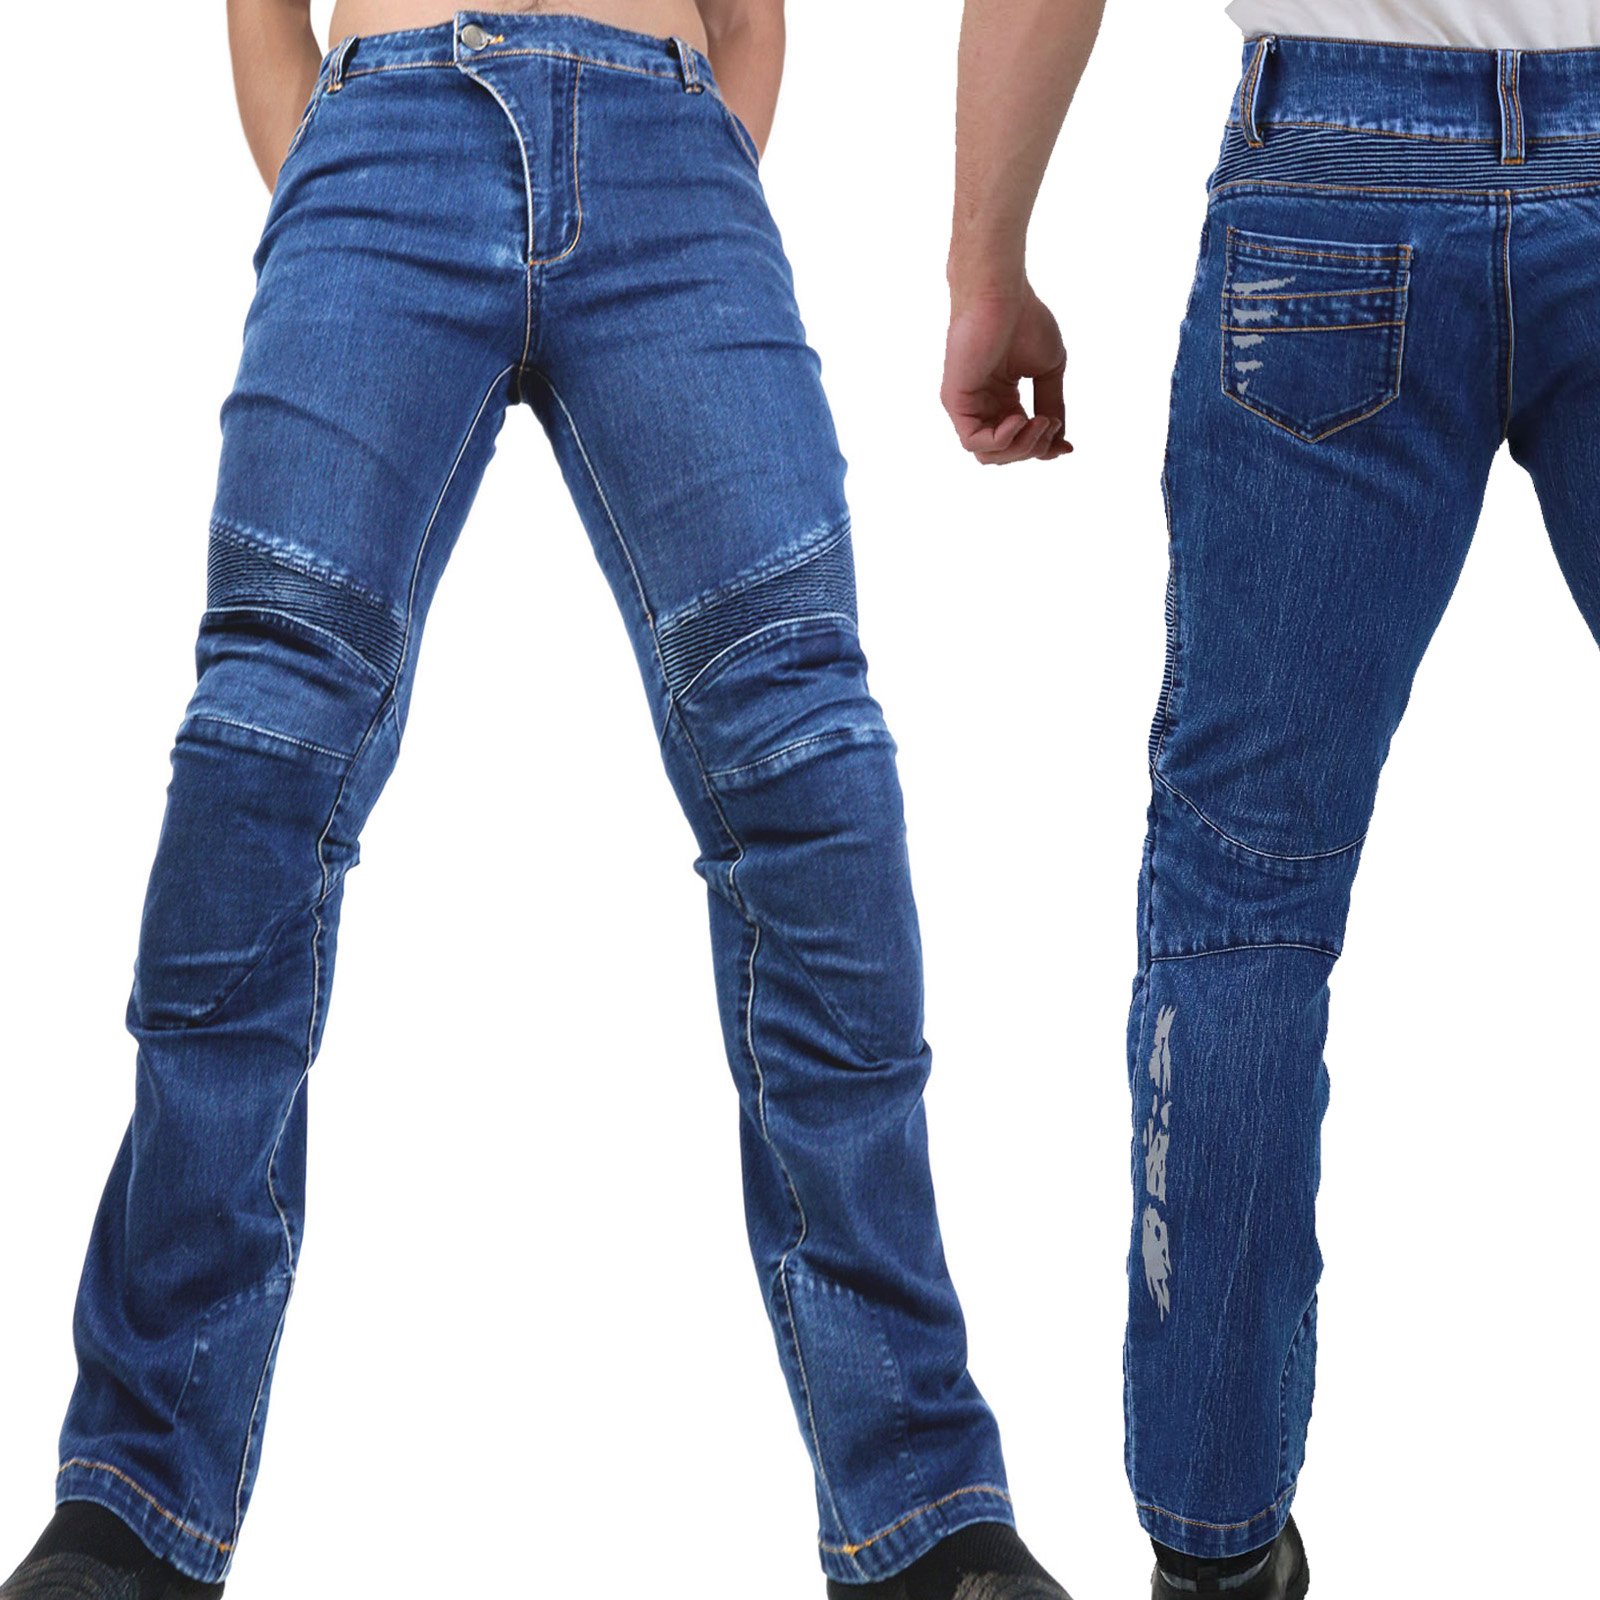 Motorradhose Jeans -Ranger- Leicht Dünn Herren Sommer Textil Jeanshose Slim Fit Motorrad Textilhose Männer Eng Stretch - blau - XL von Nerve Shop